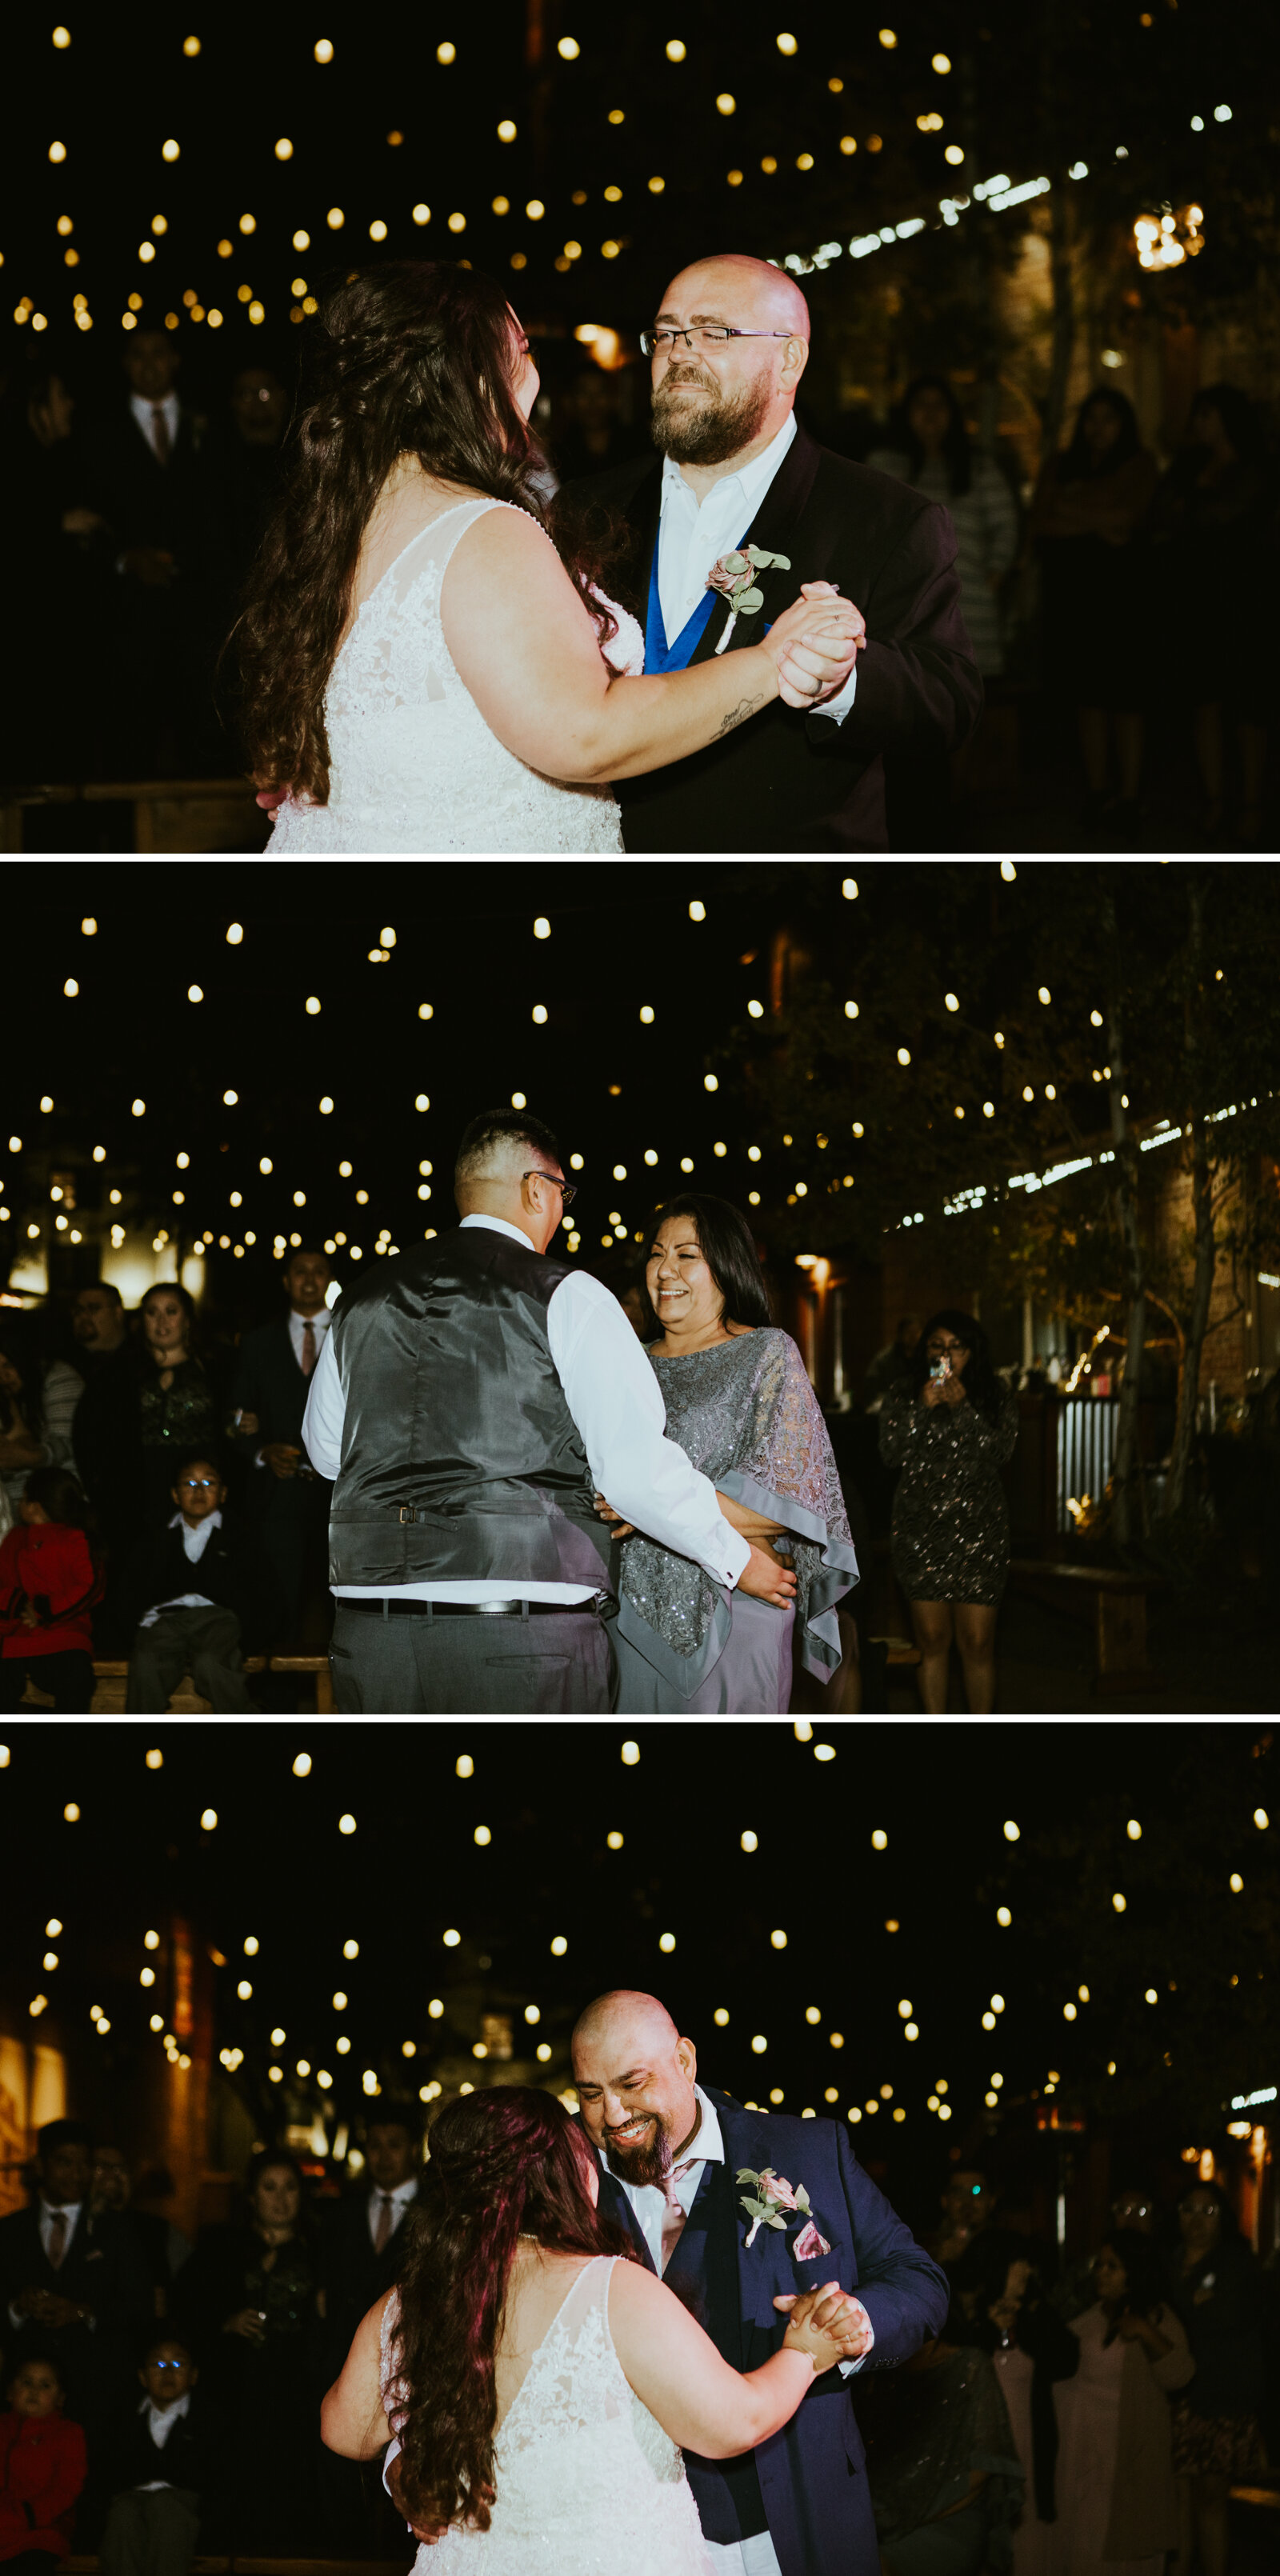 GRAND HIGHLAND HOTEL PRESCOTT ARIZONA WEDDING PHOTOGRAPHY PARENT DANCES.jpg